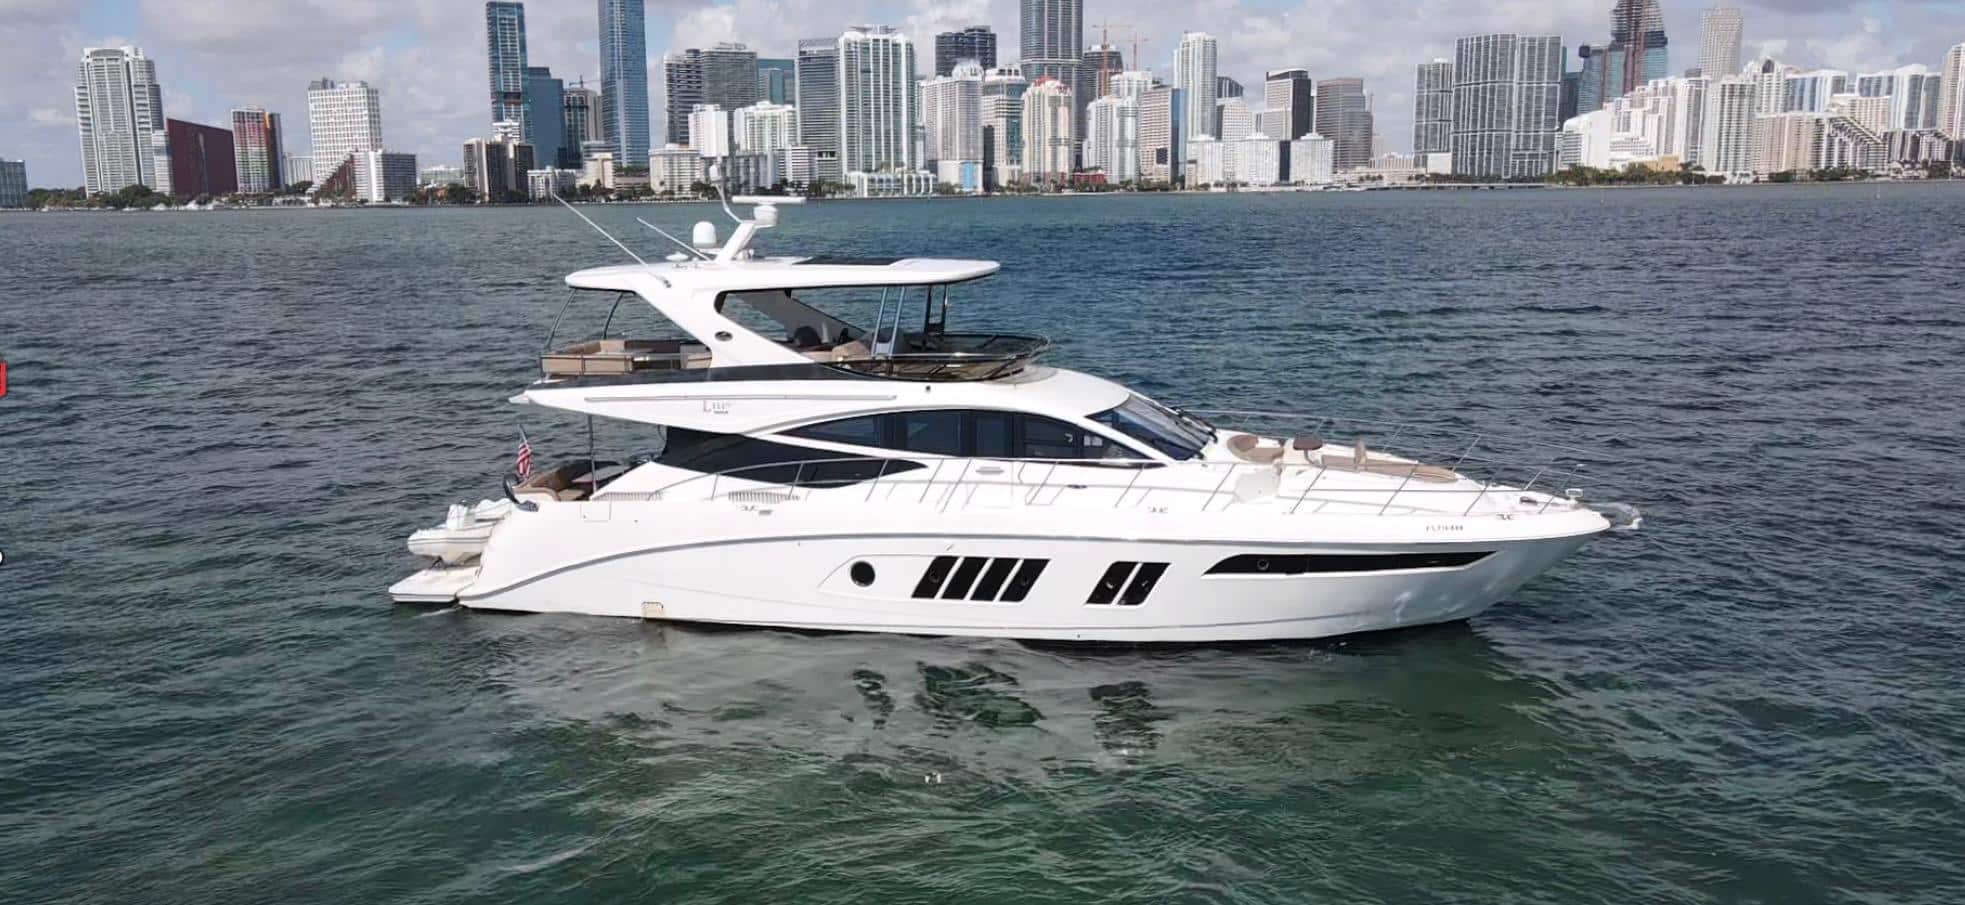 sea ray yachts for sale florida